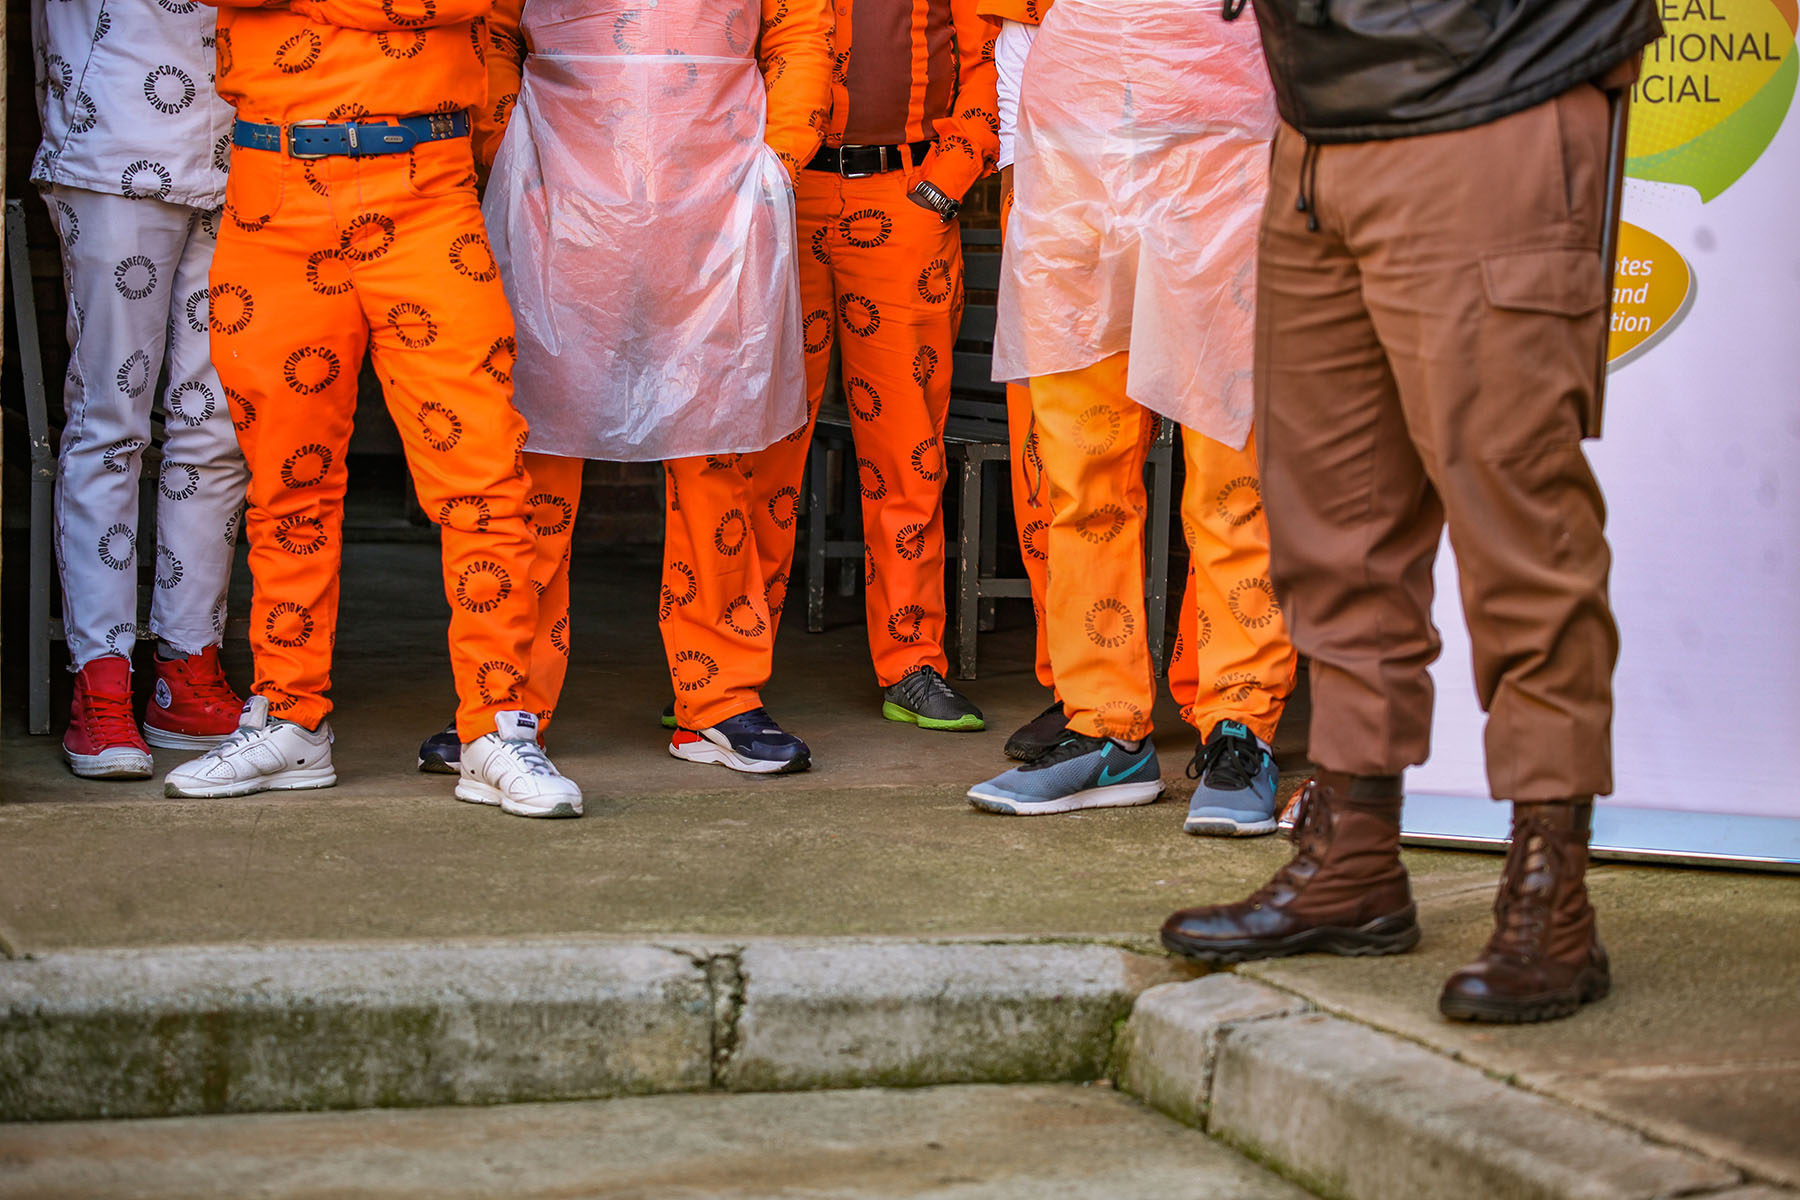 Legs of prisoners (orange uniforms) and a guard (brown uniform)